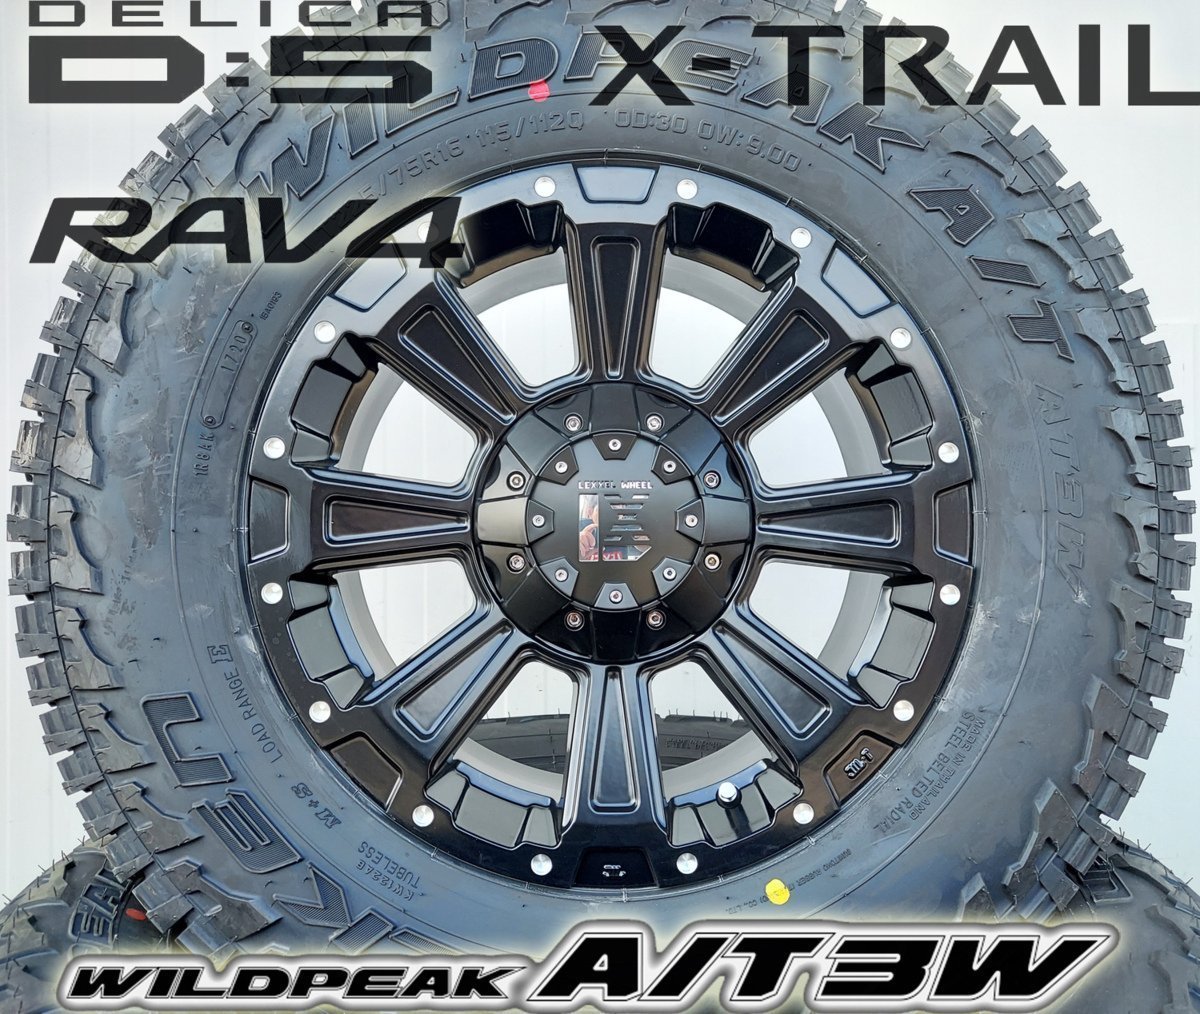 LEXXEL DeathRock デリカD5 RAV4 エクストレイル CX5 16インチ ファルケン WILDEPEAK A/T03W 225/75R16 235/70R16_画像1